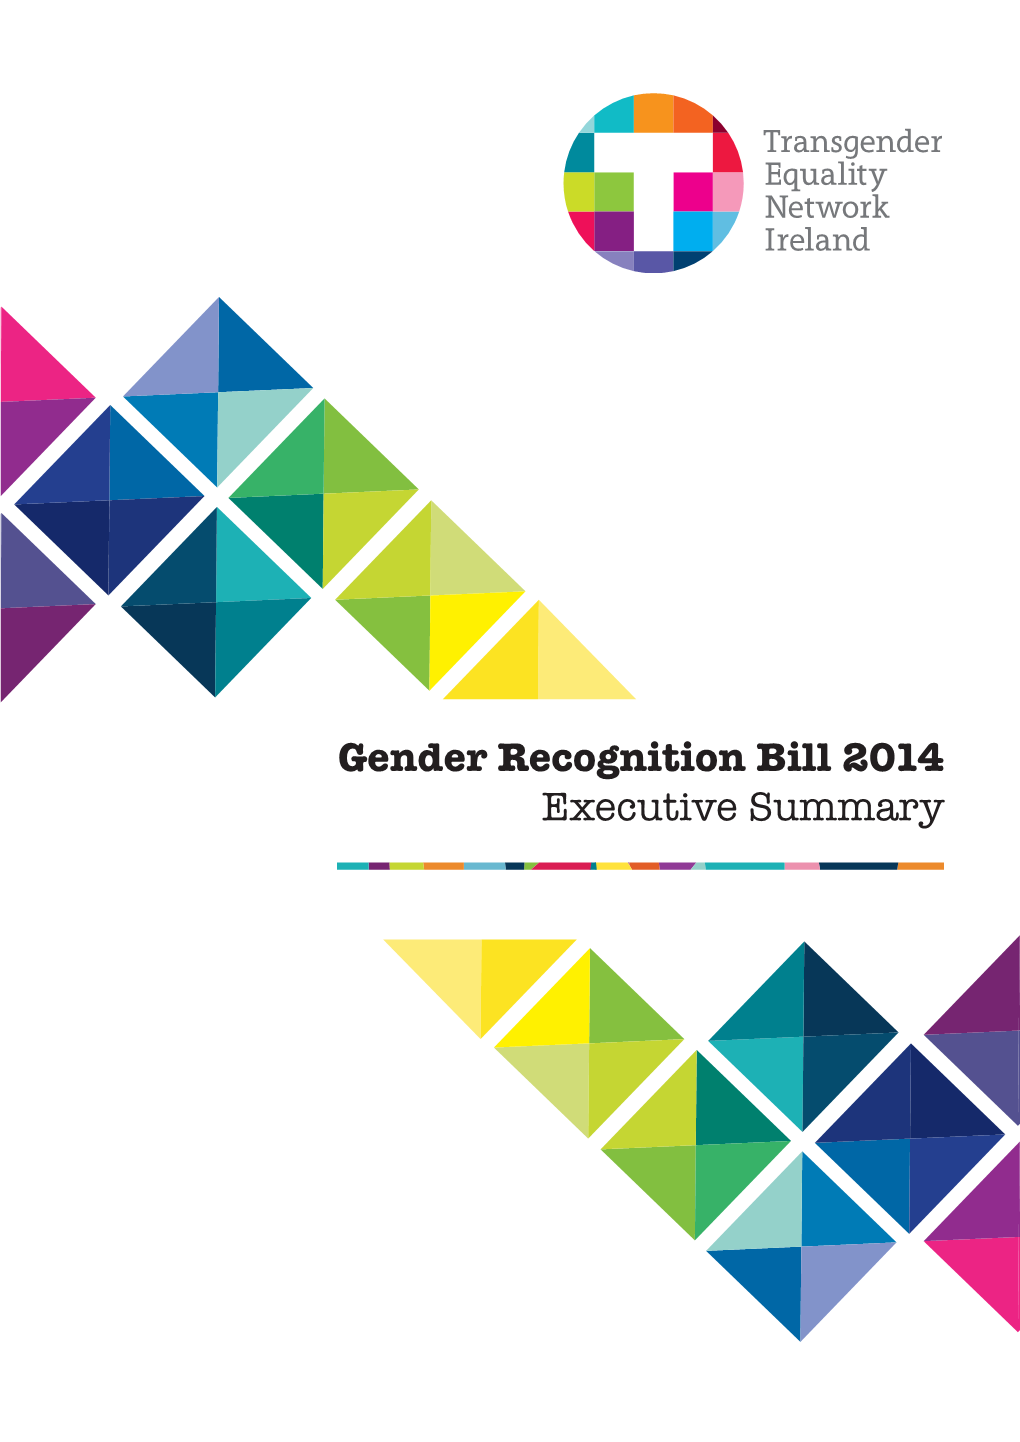 Gender Recognition Bill 2014 Executive Summary © 2015 Transgender Equality Network Ireland (TENI)